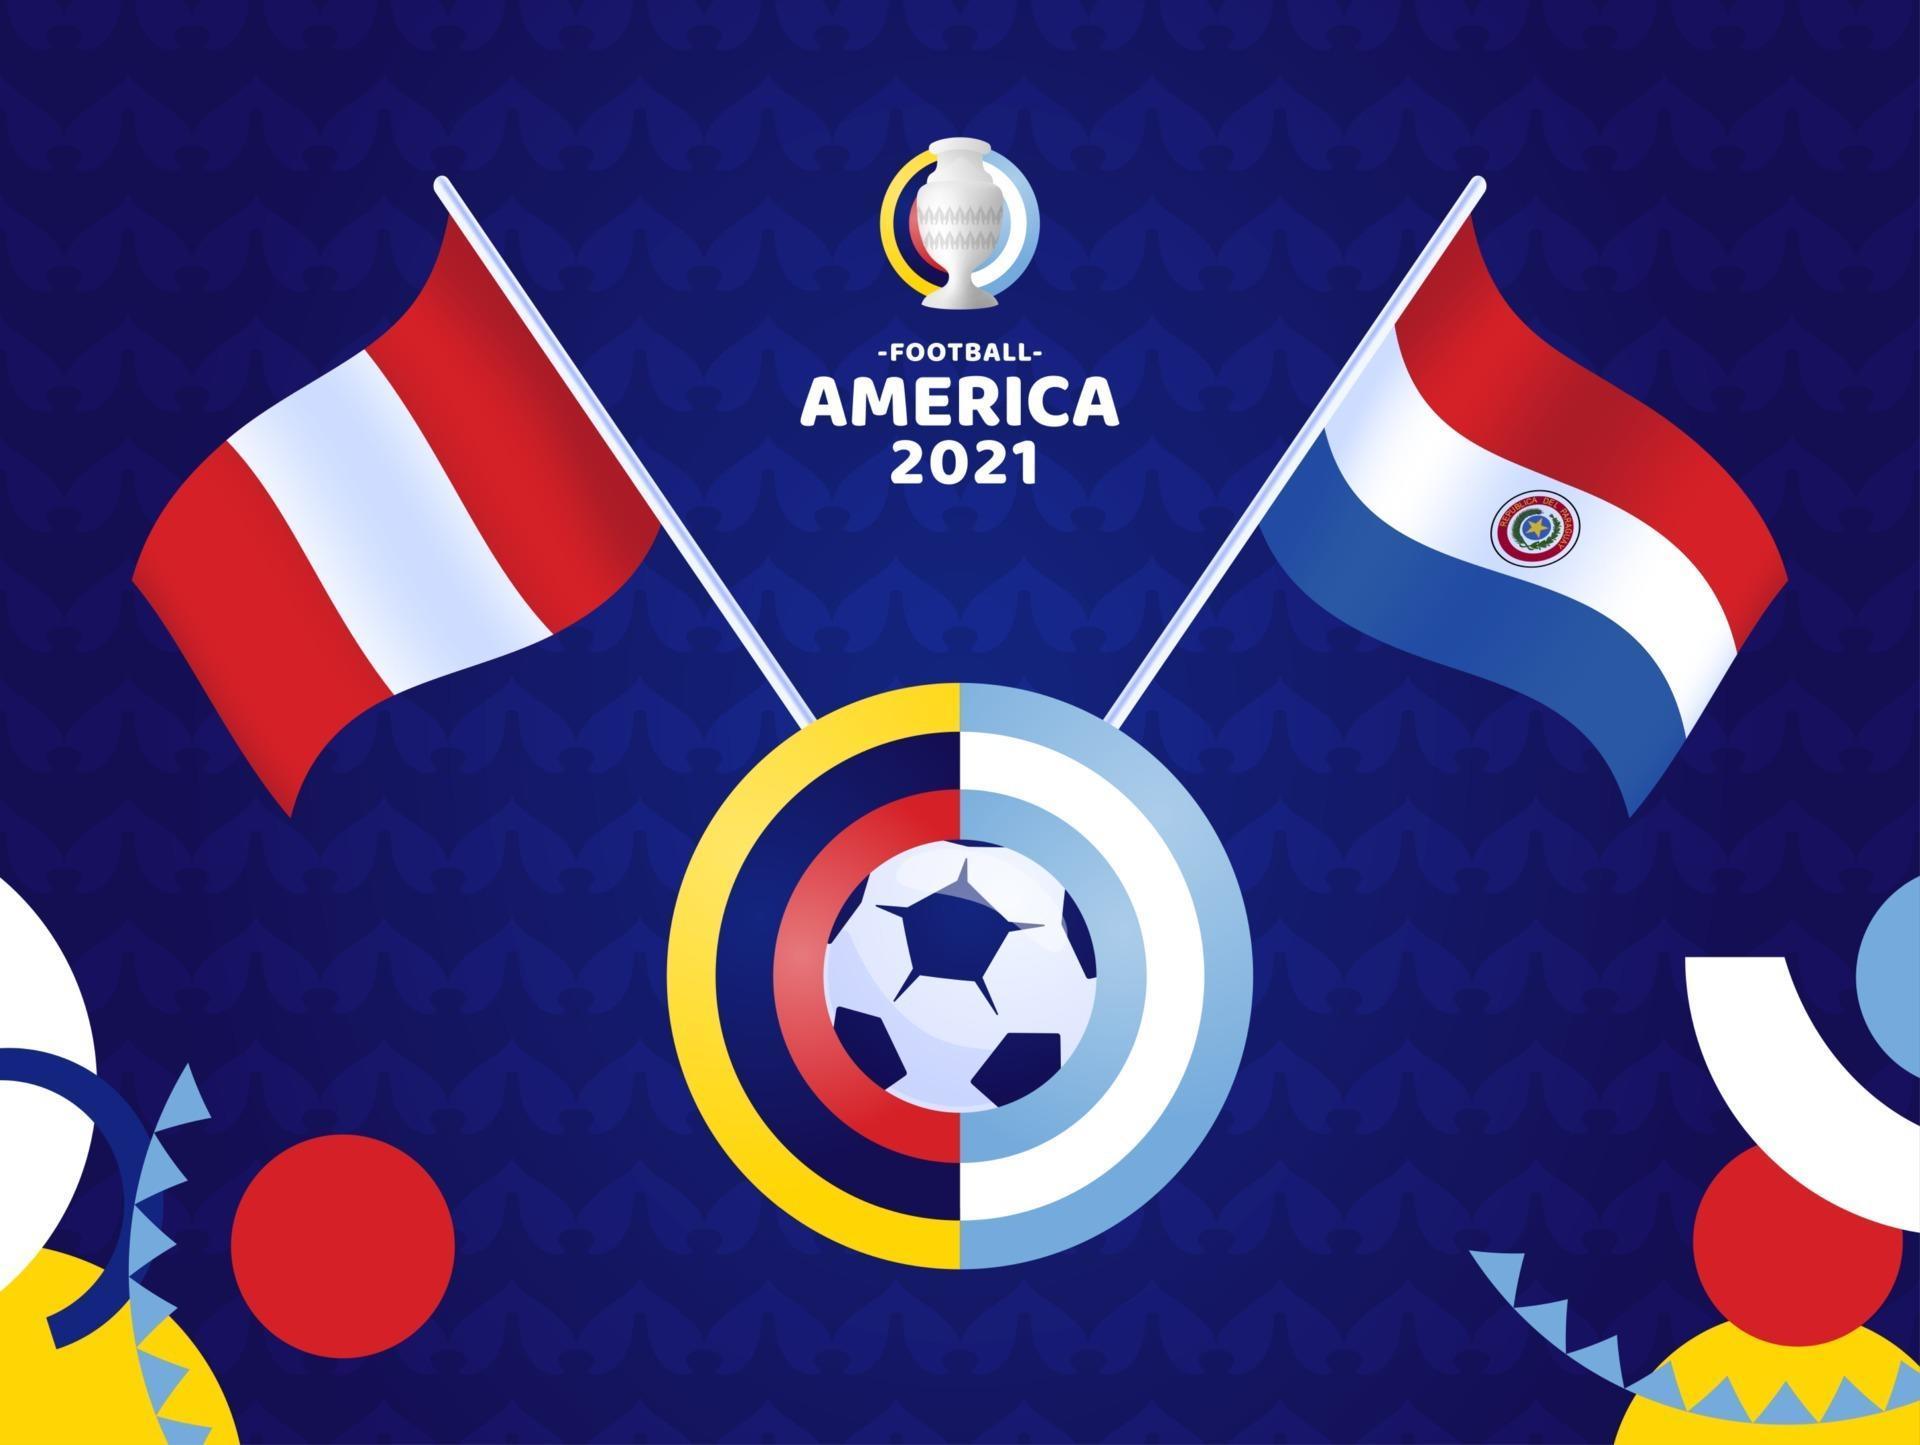 Peru vs Paraguay match vector illustration Football 2021 championship